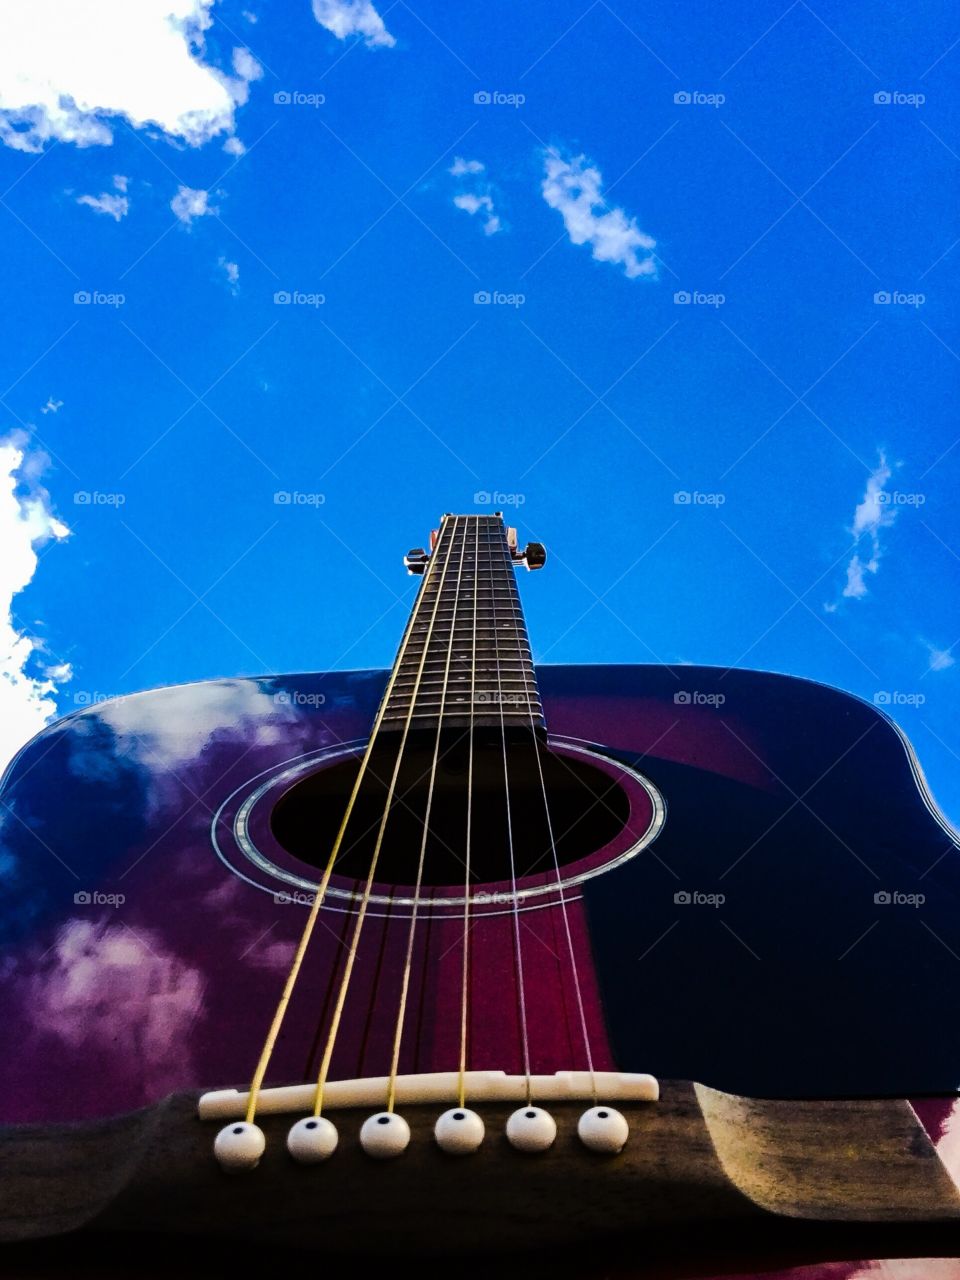 Guitar and sky